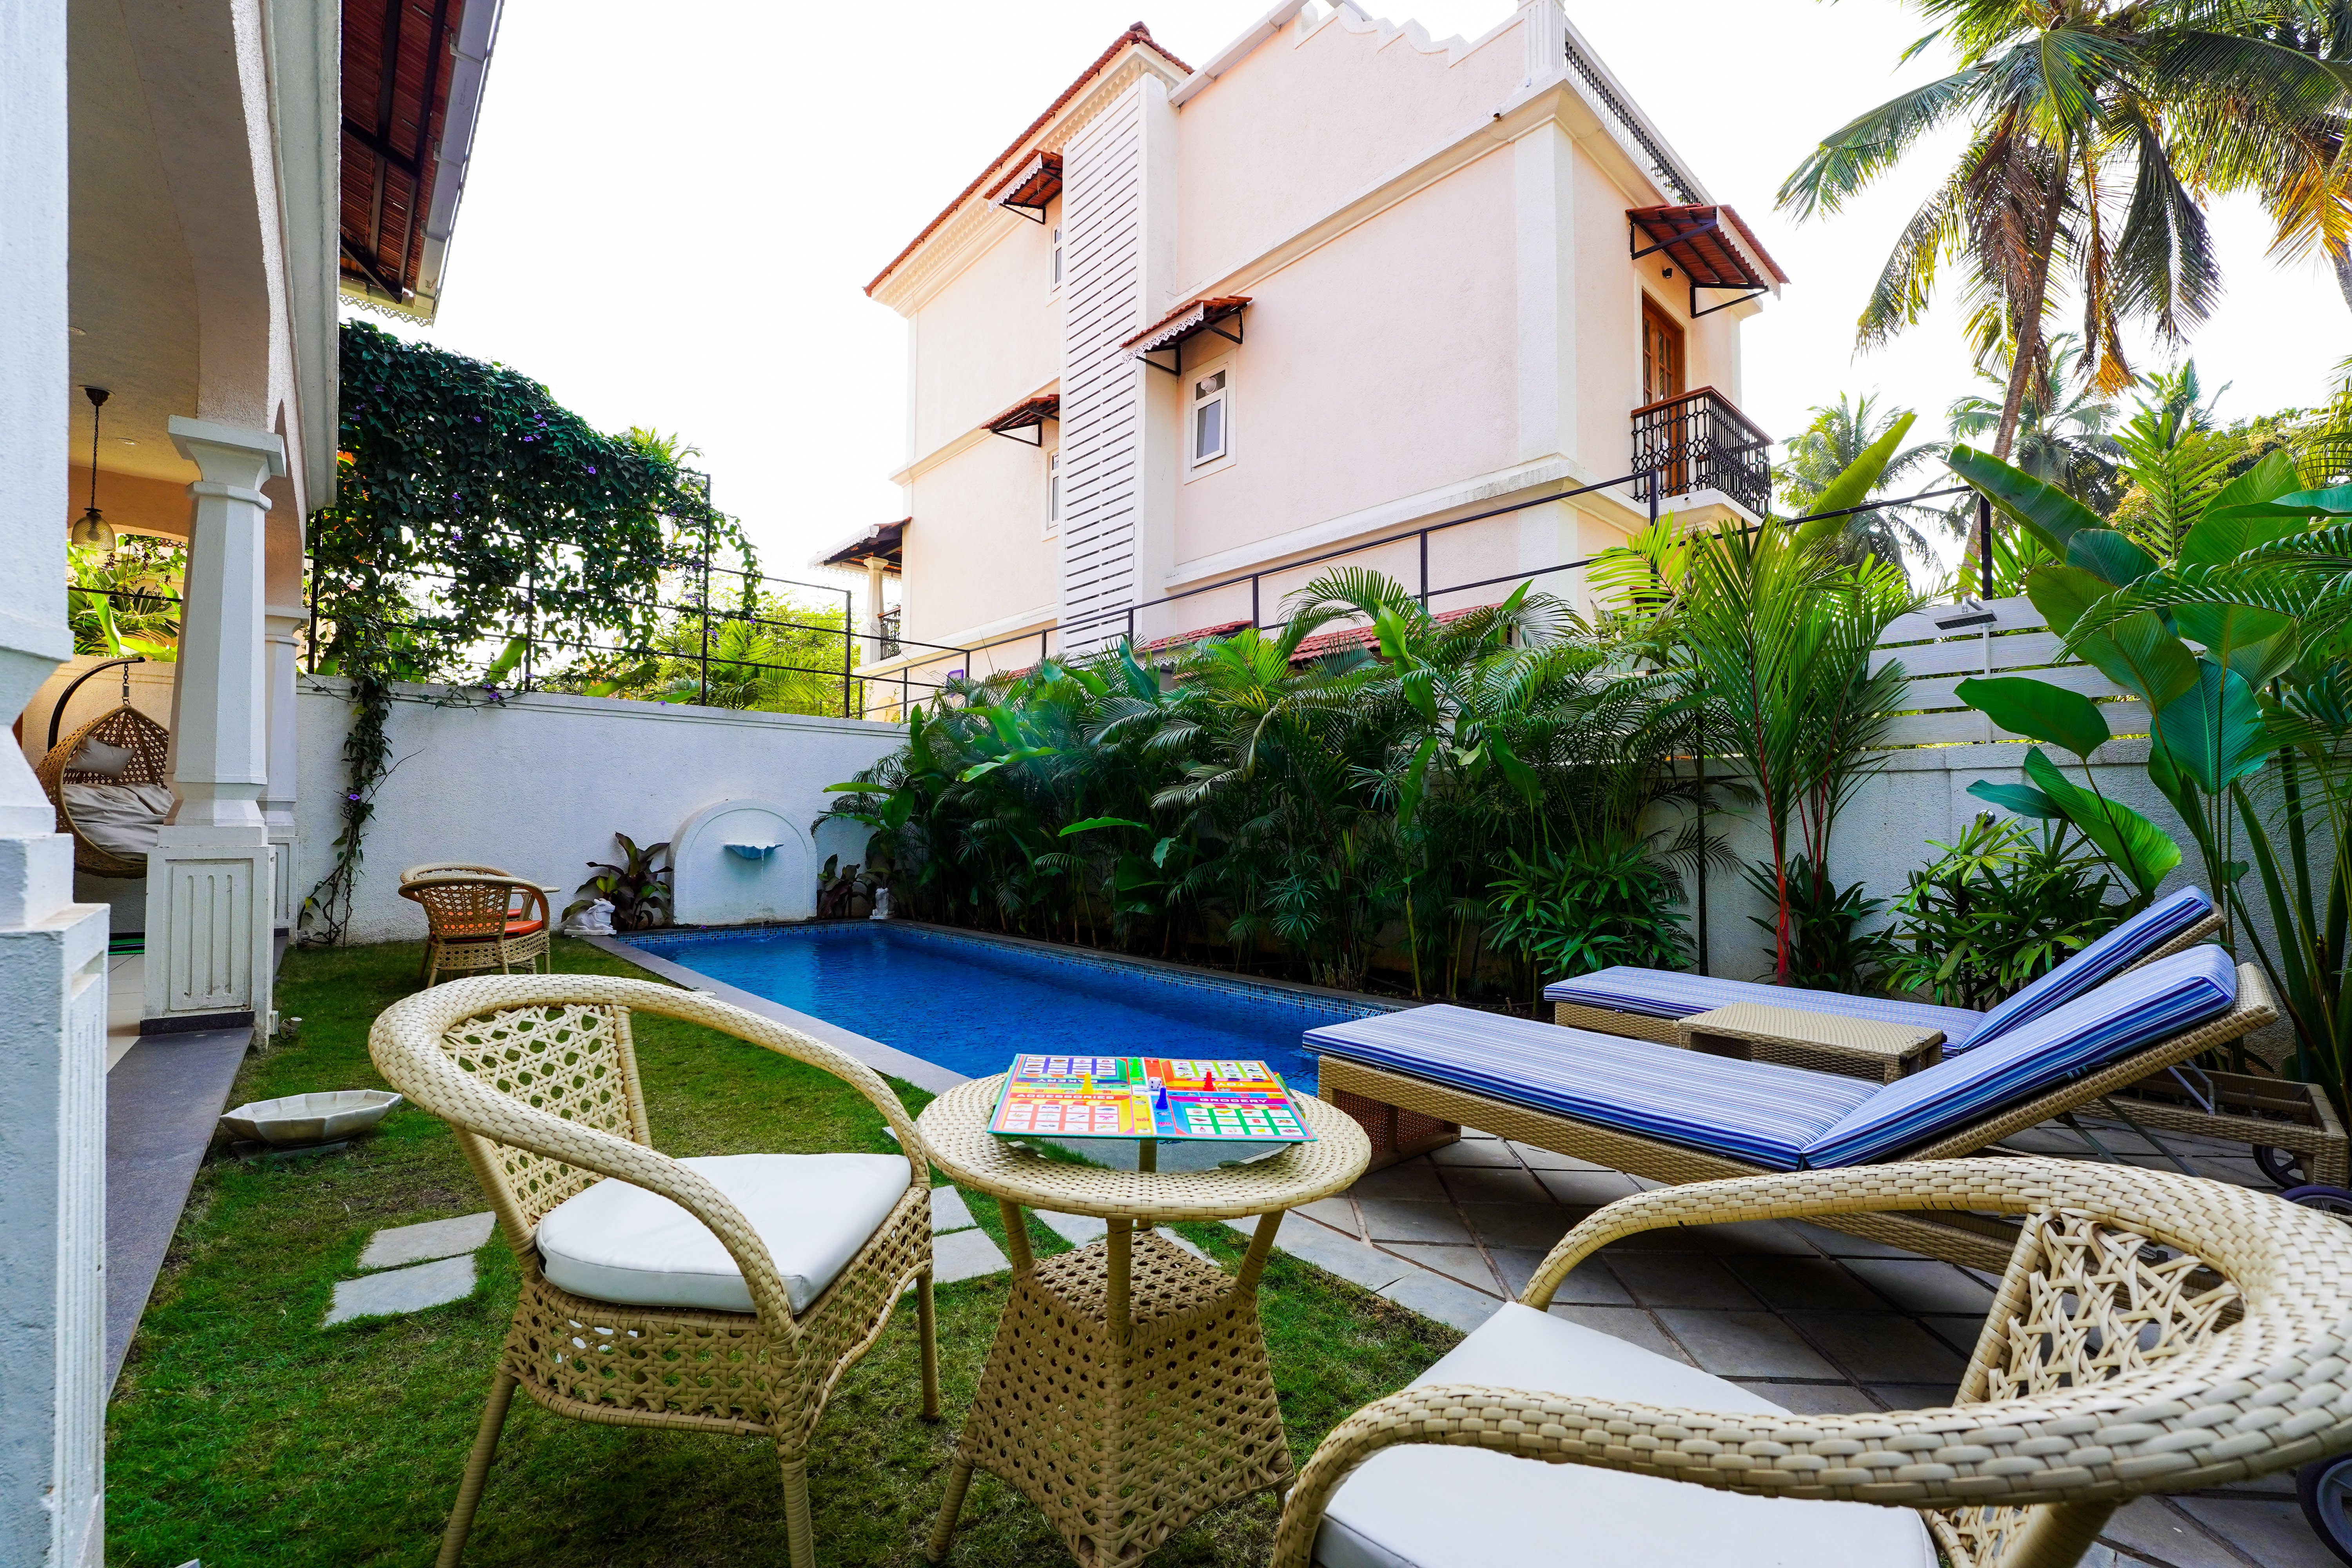 Luxury villas in Arpora, North Goa, India LT434(A1)